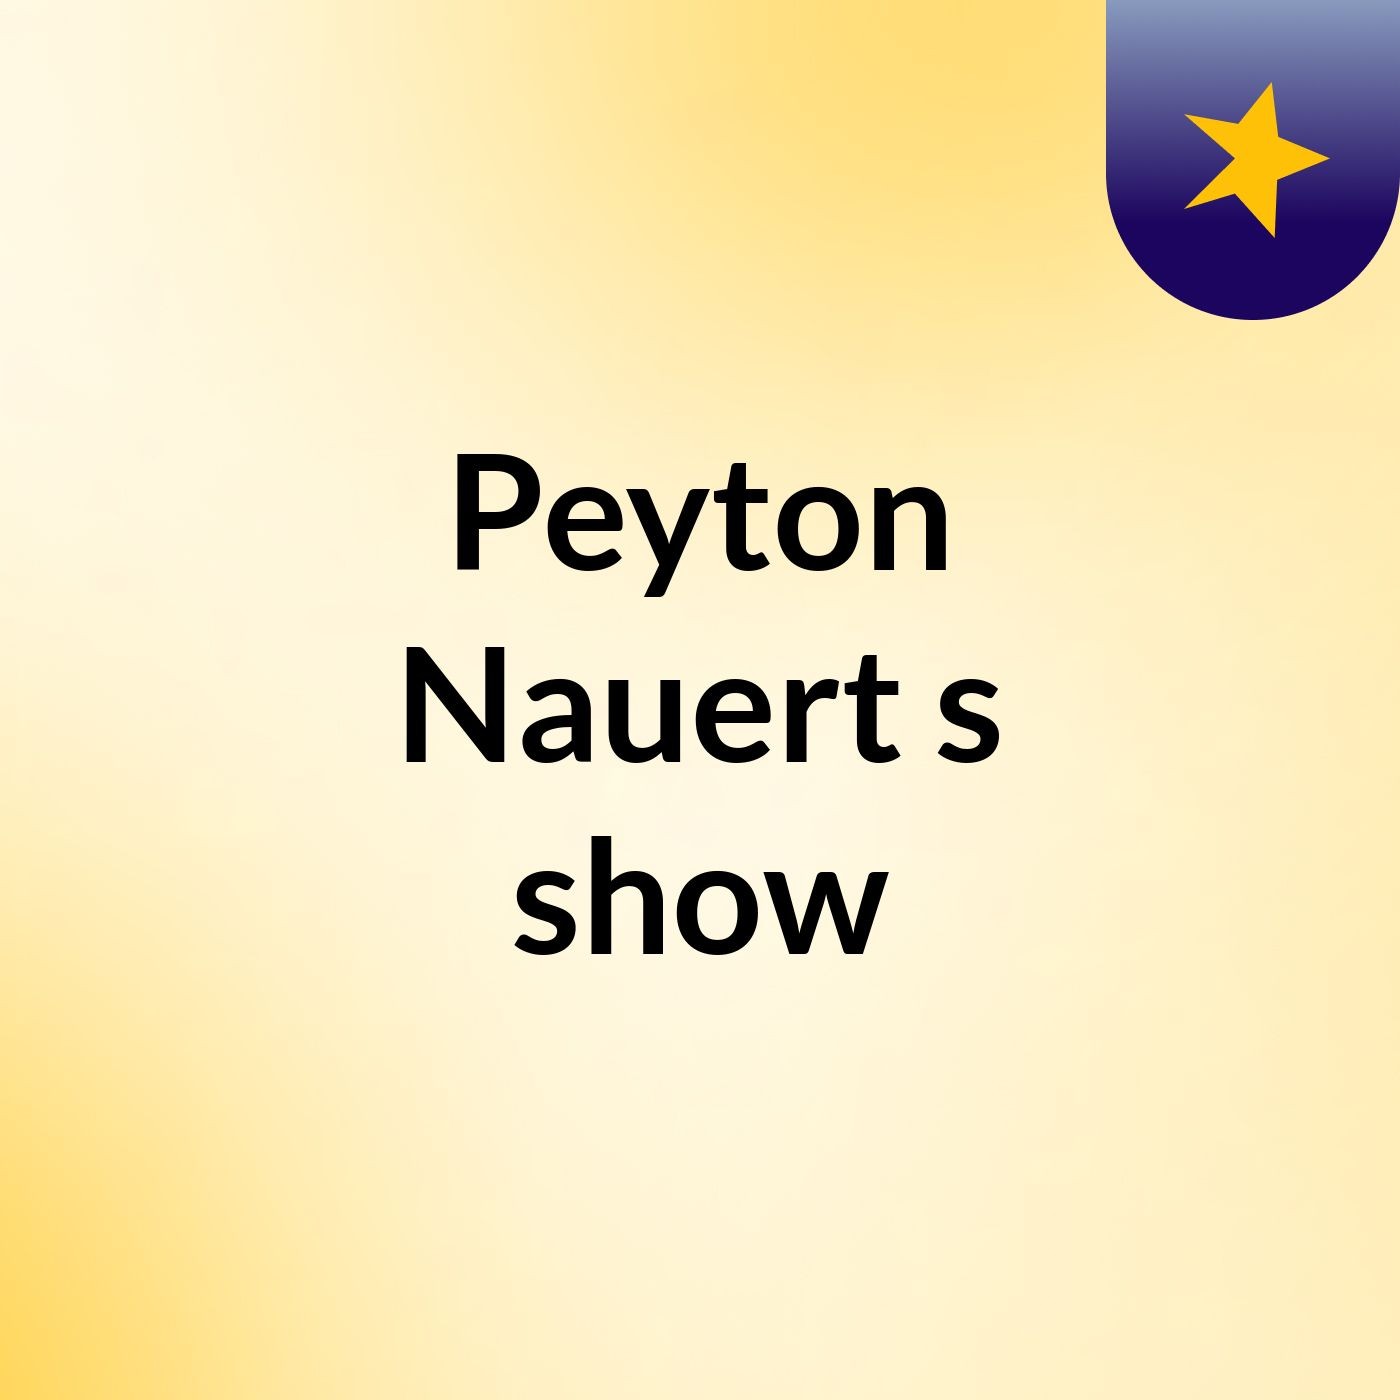 Peyton Nauert's show